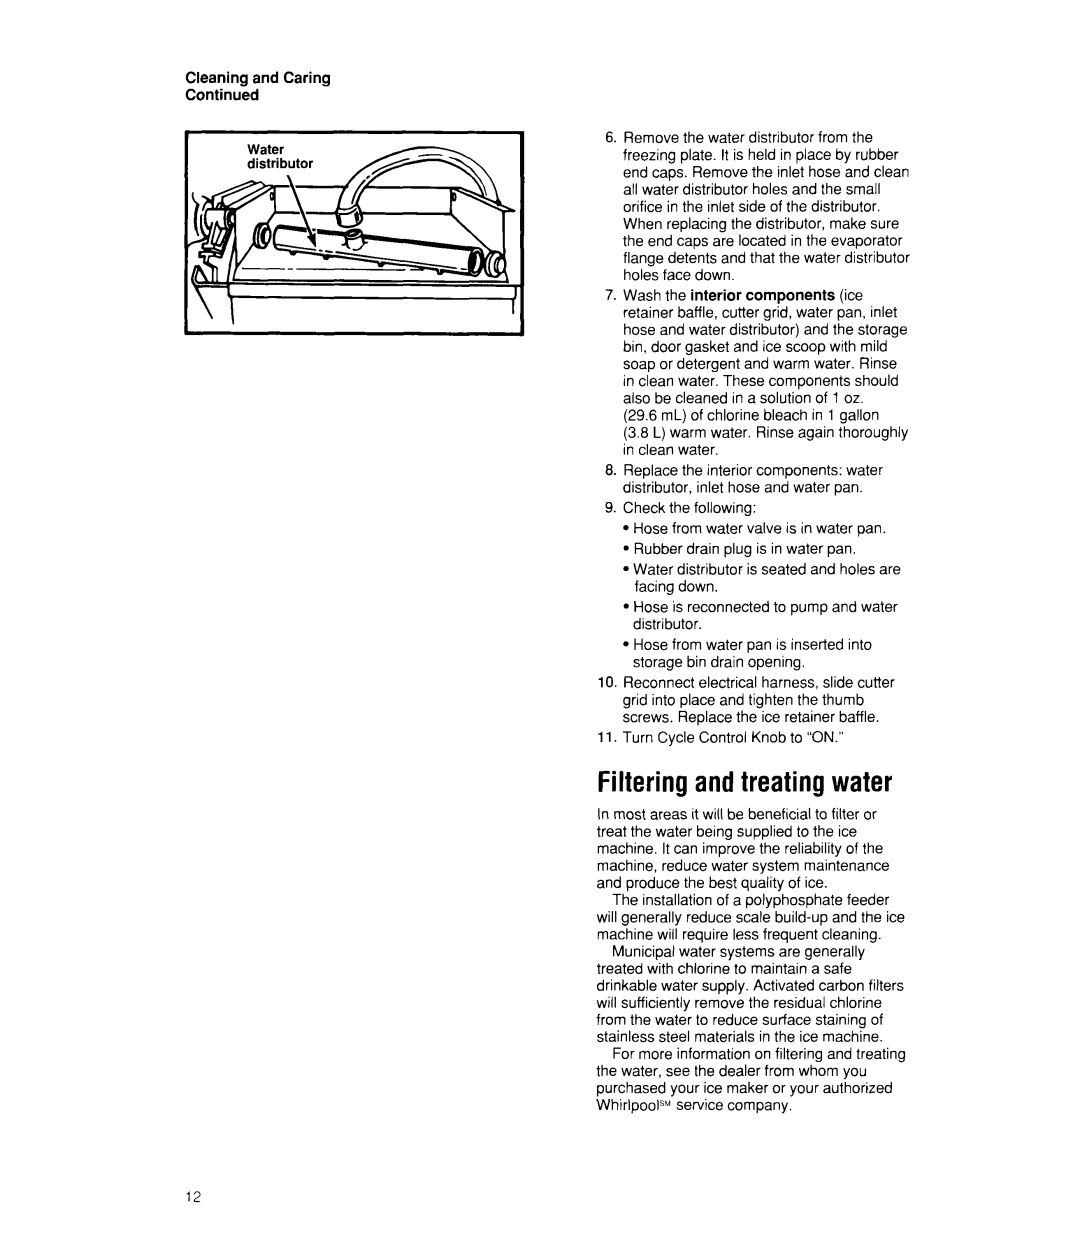 Whirlpool EC510 manual Filteringandtreatingwater 